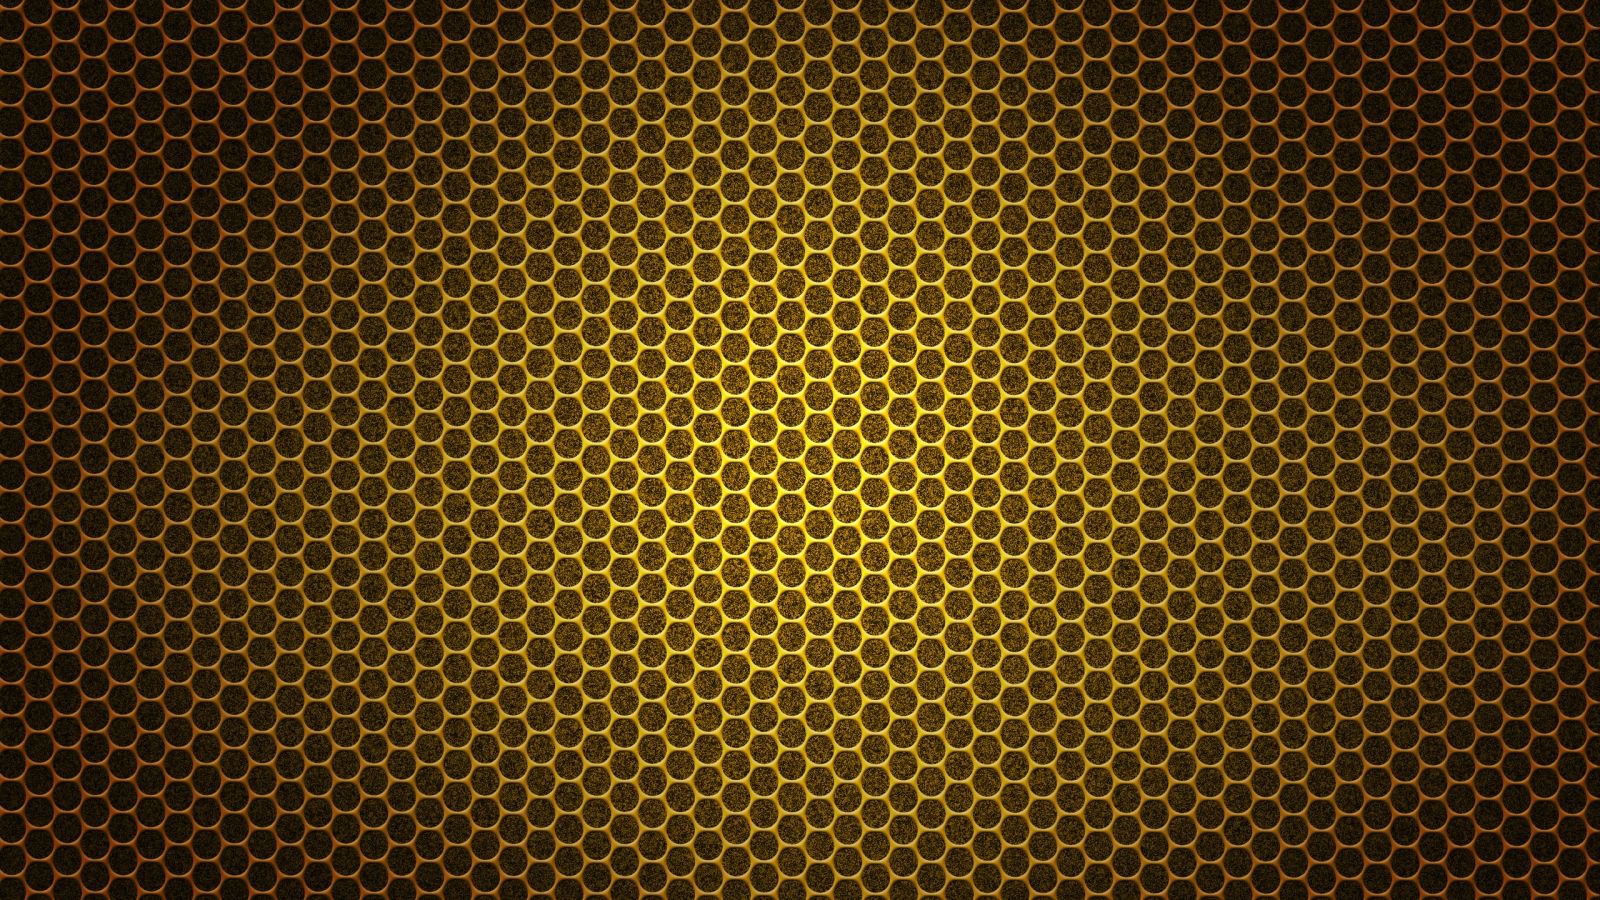 Free download Golden mesh wallpaper Digital Art wallpaper 1227 [2560x1600] for your Desktop, Mobile & Tablet. Explore Golden Wallpaper. Golden Retriever Wallpaper, Golden Retriever Puppies Wallpaper Desktop, Wallpaper with Gold